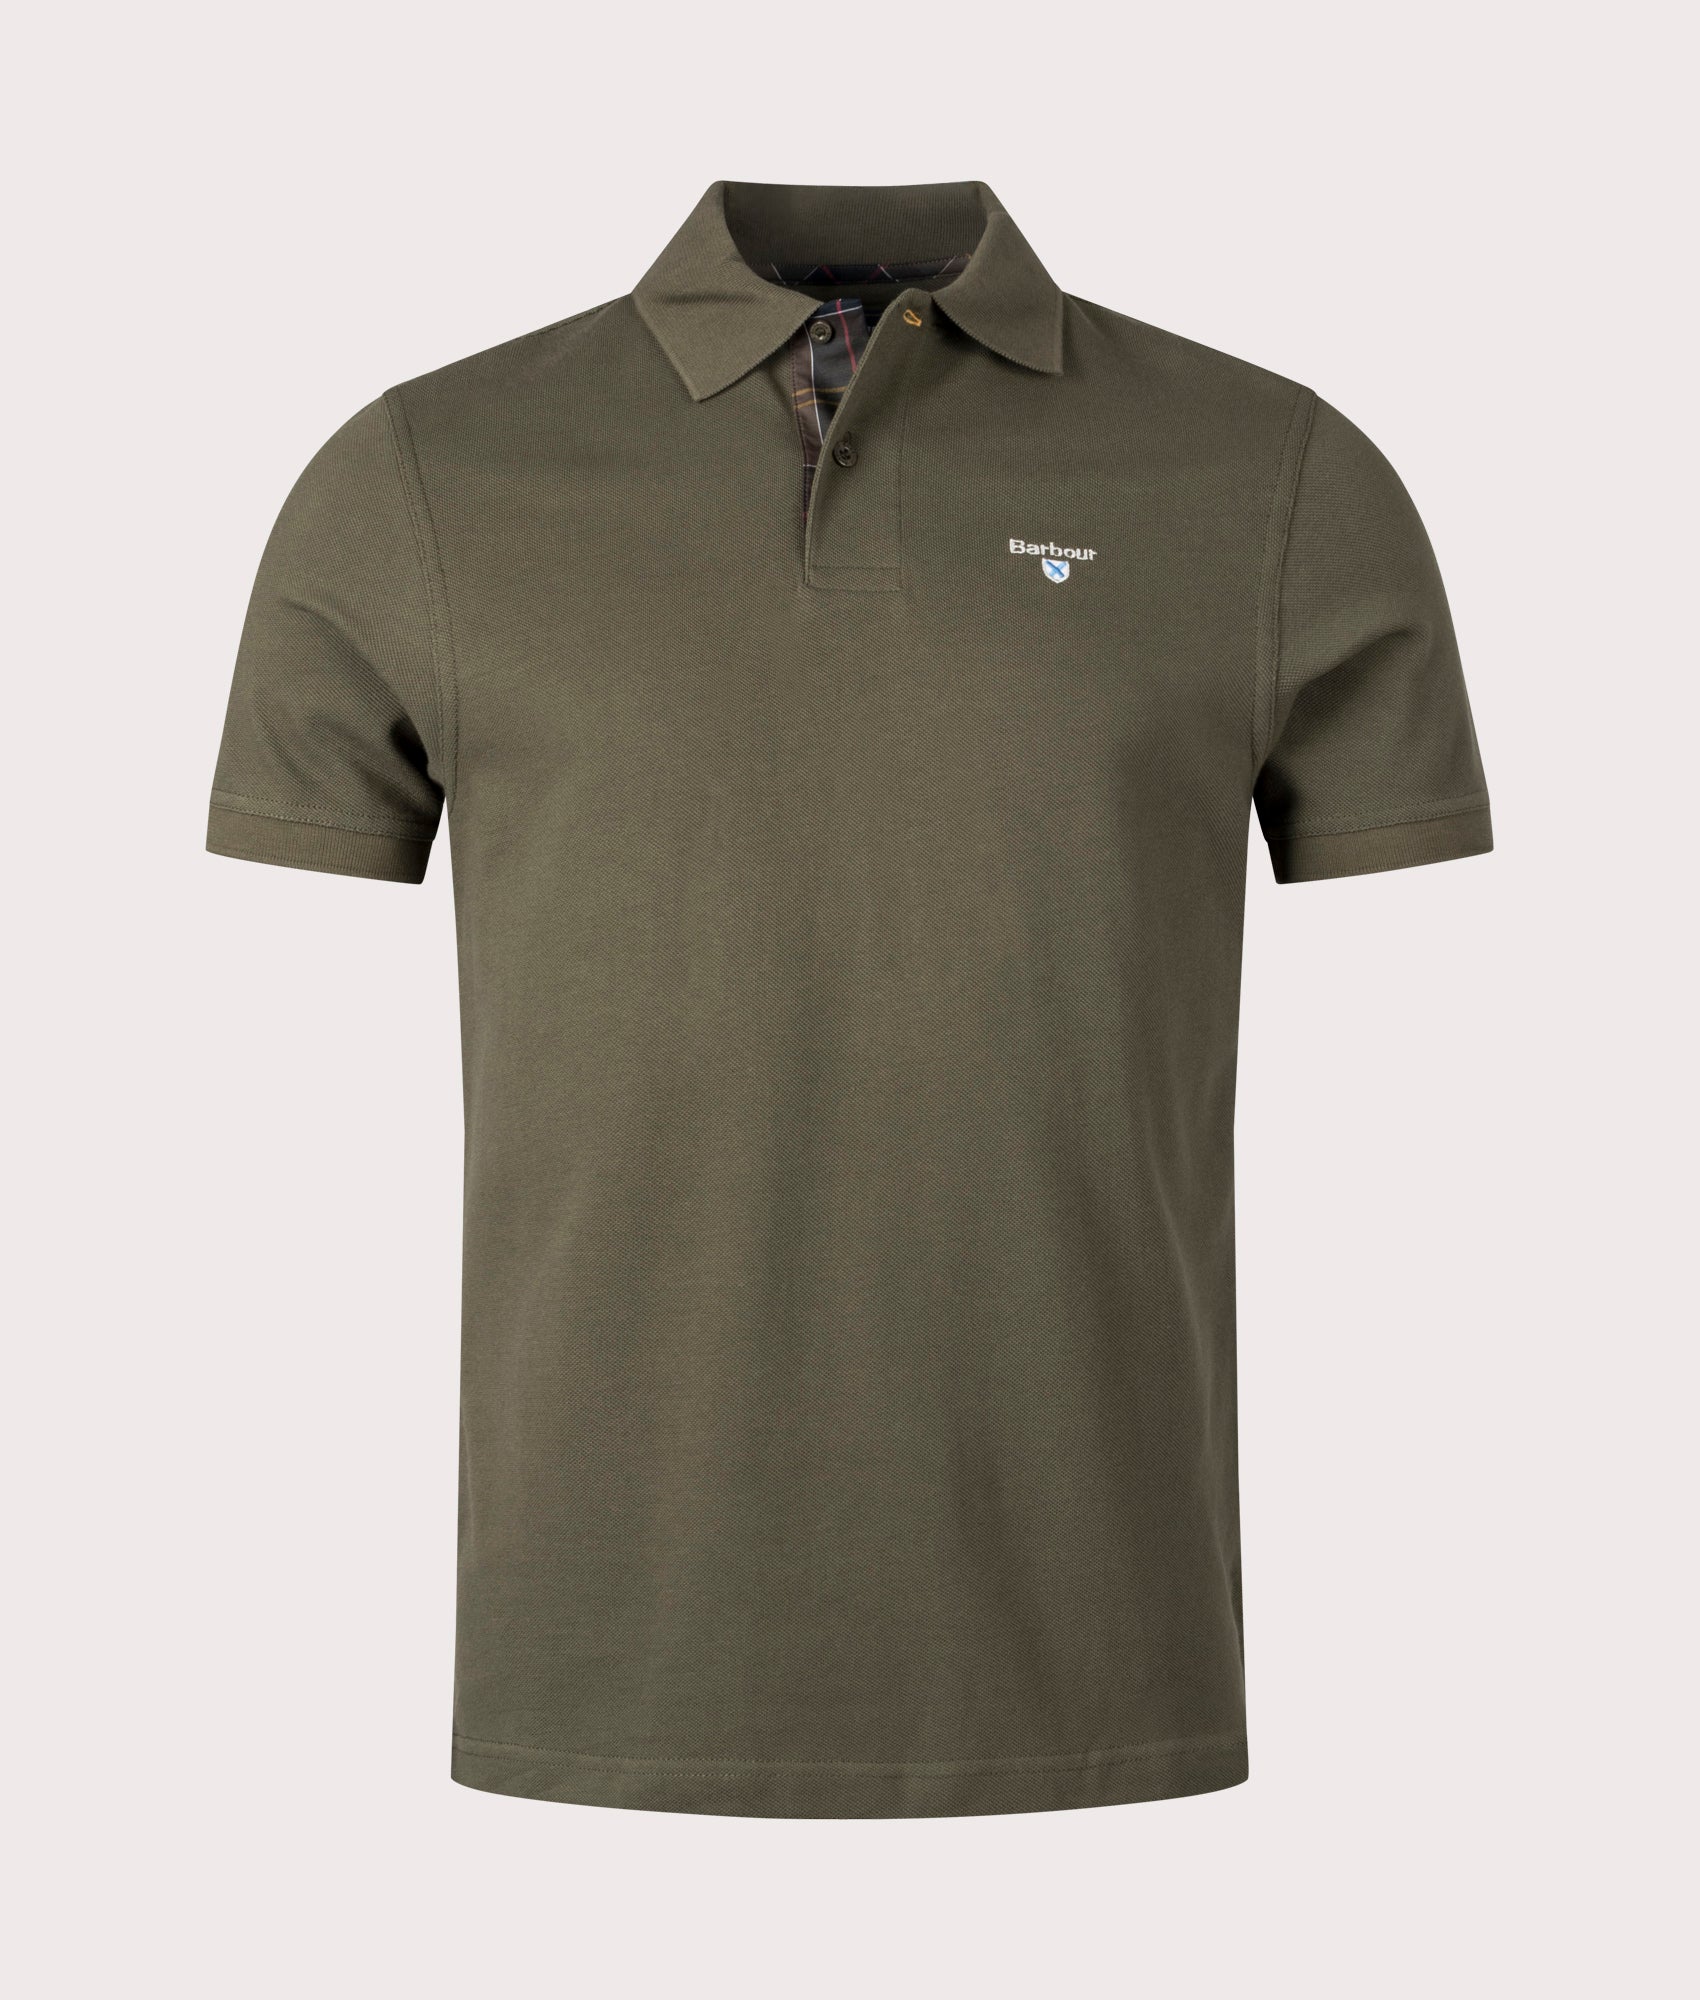 Barbour Lifestyle Mens Tartan Pique Polo Shirt - Colour: OL51 Dark Olive/Classic - Size: Medium